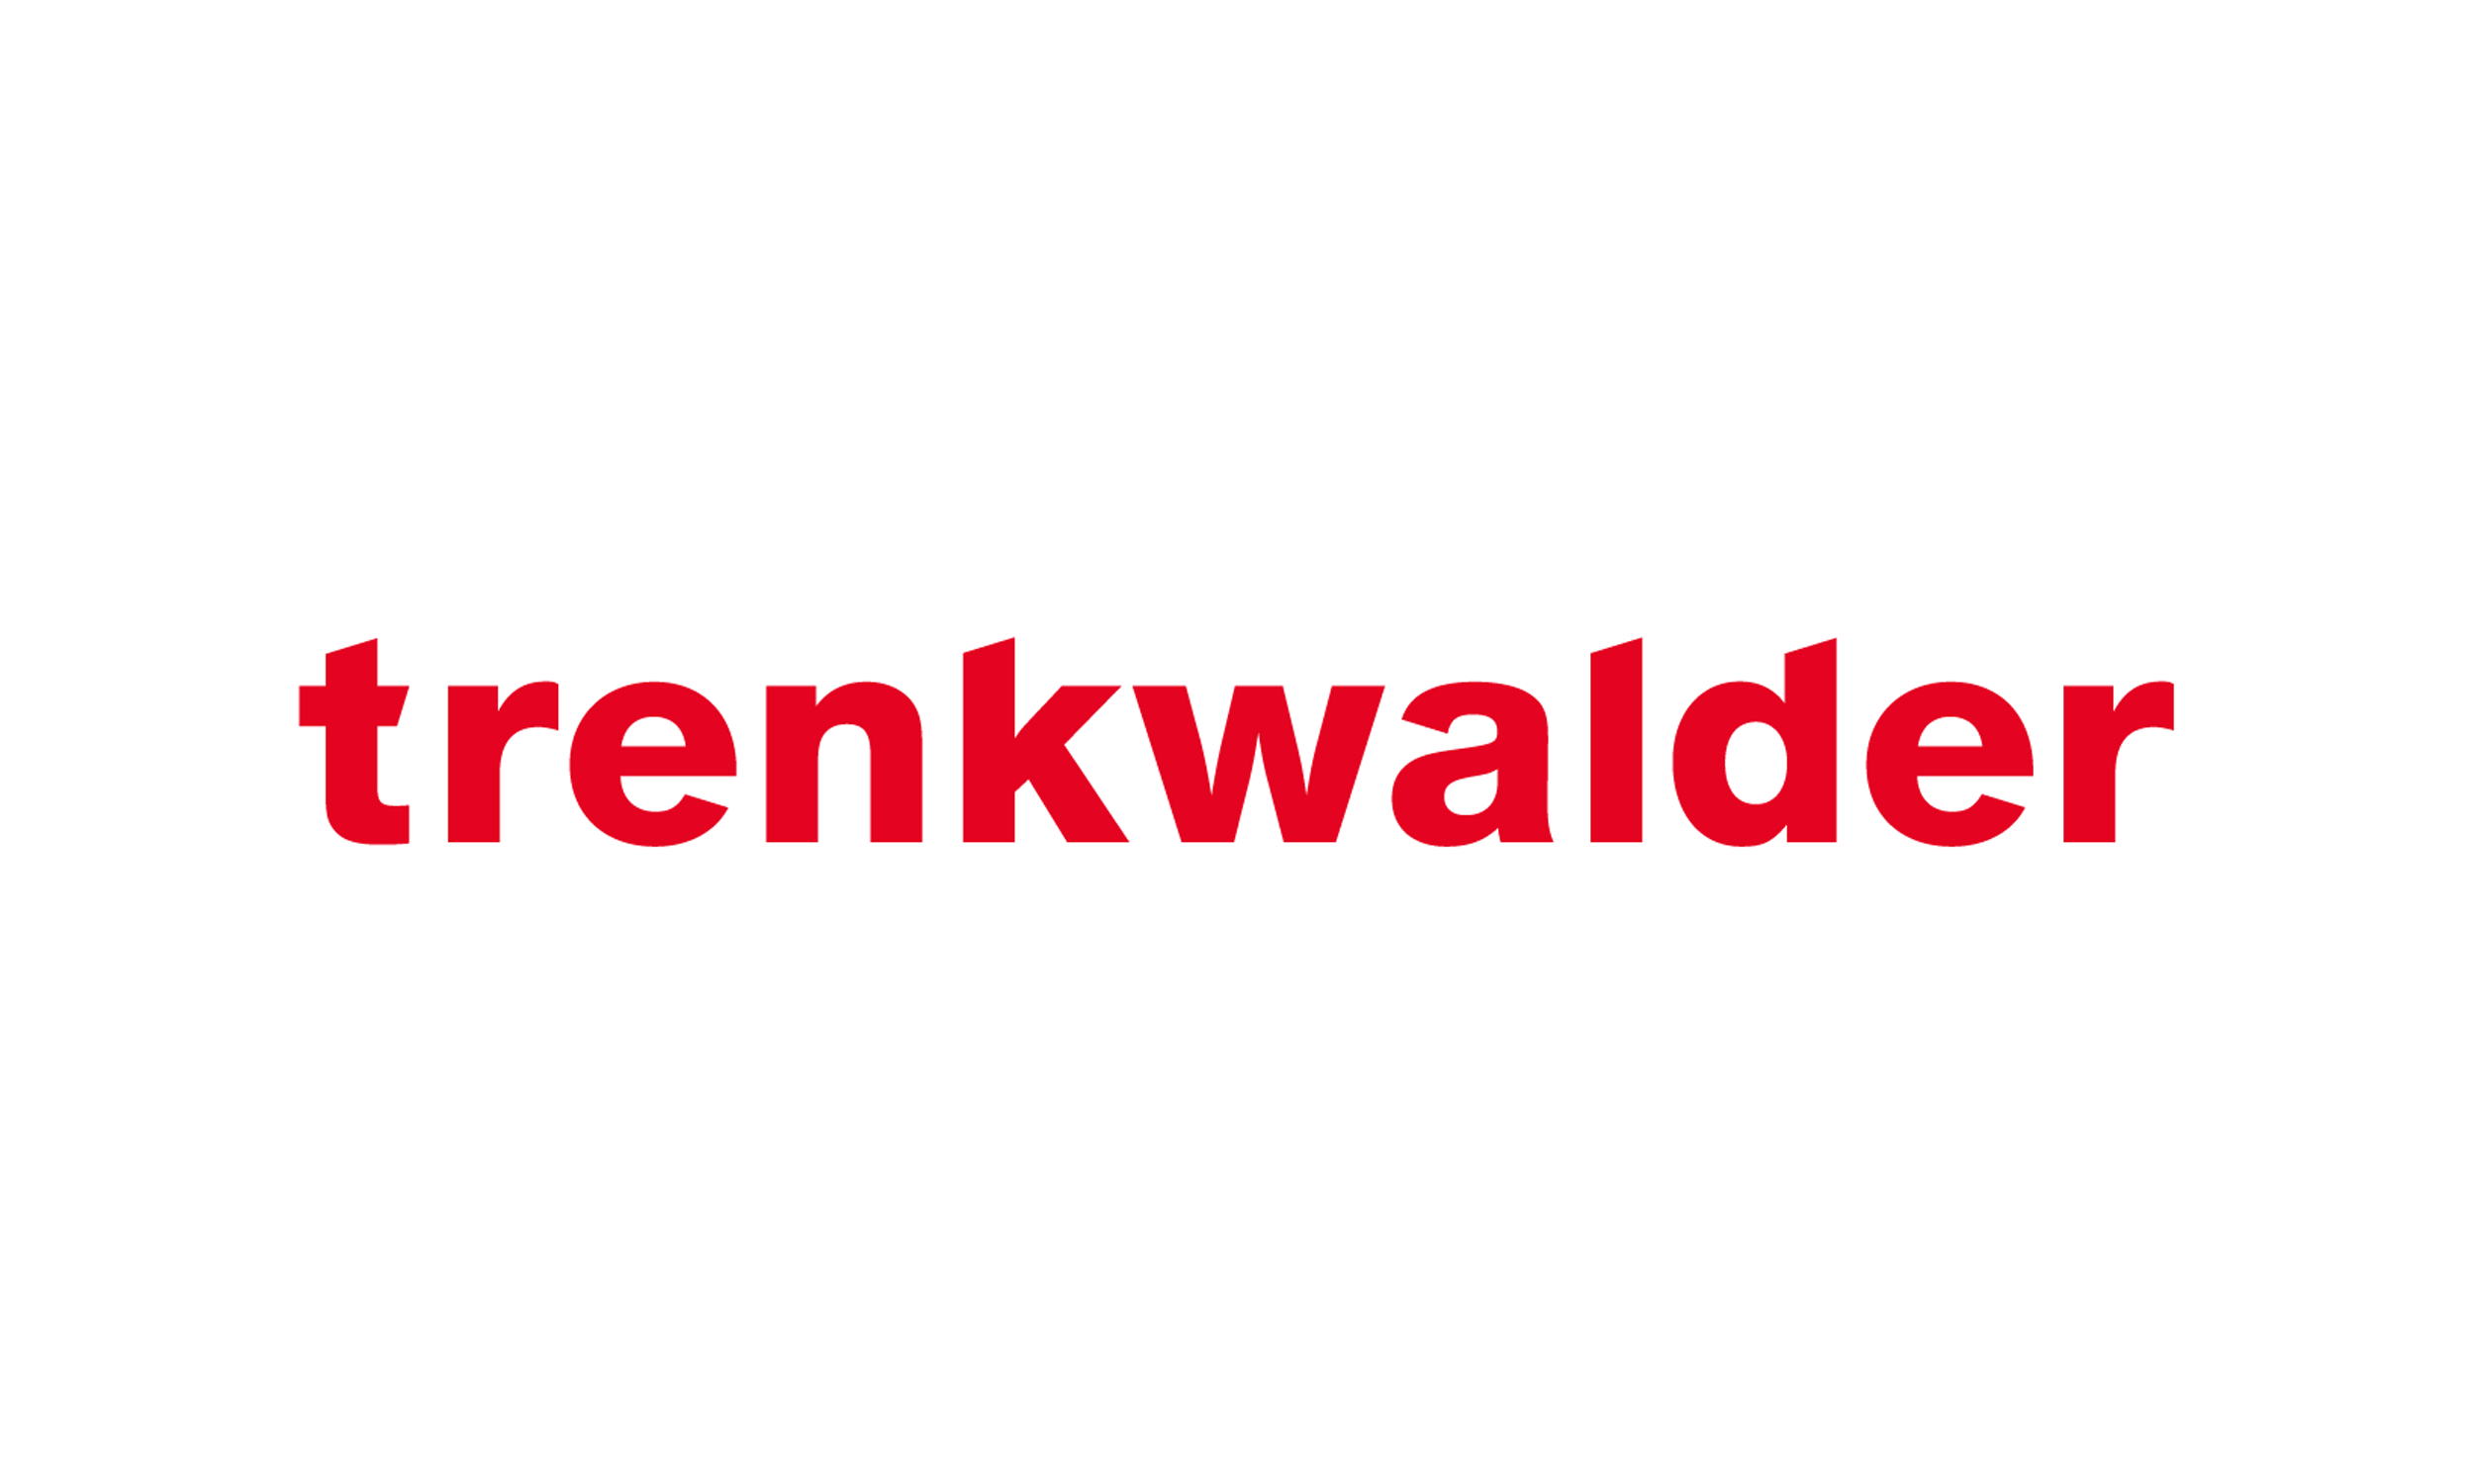 A Trenkwalder logója